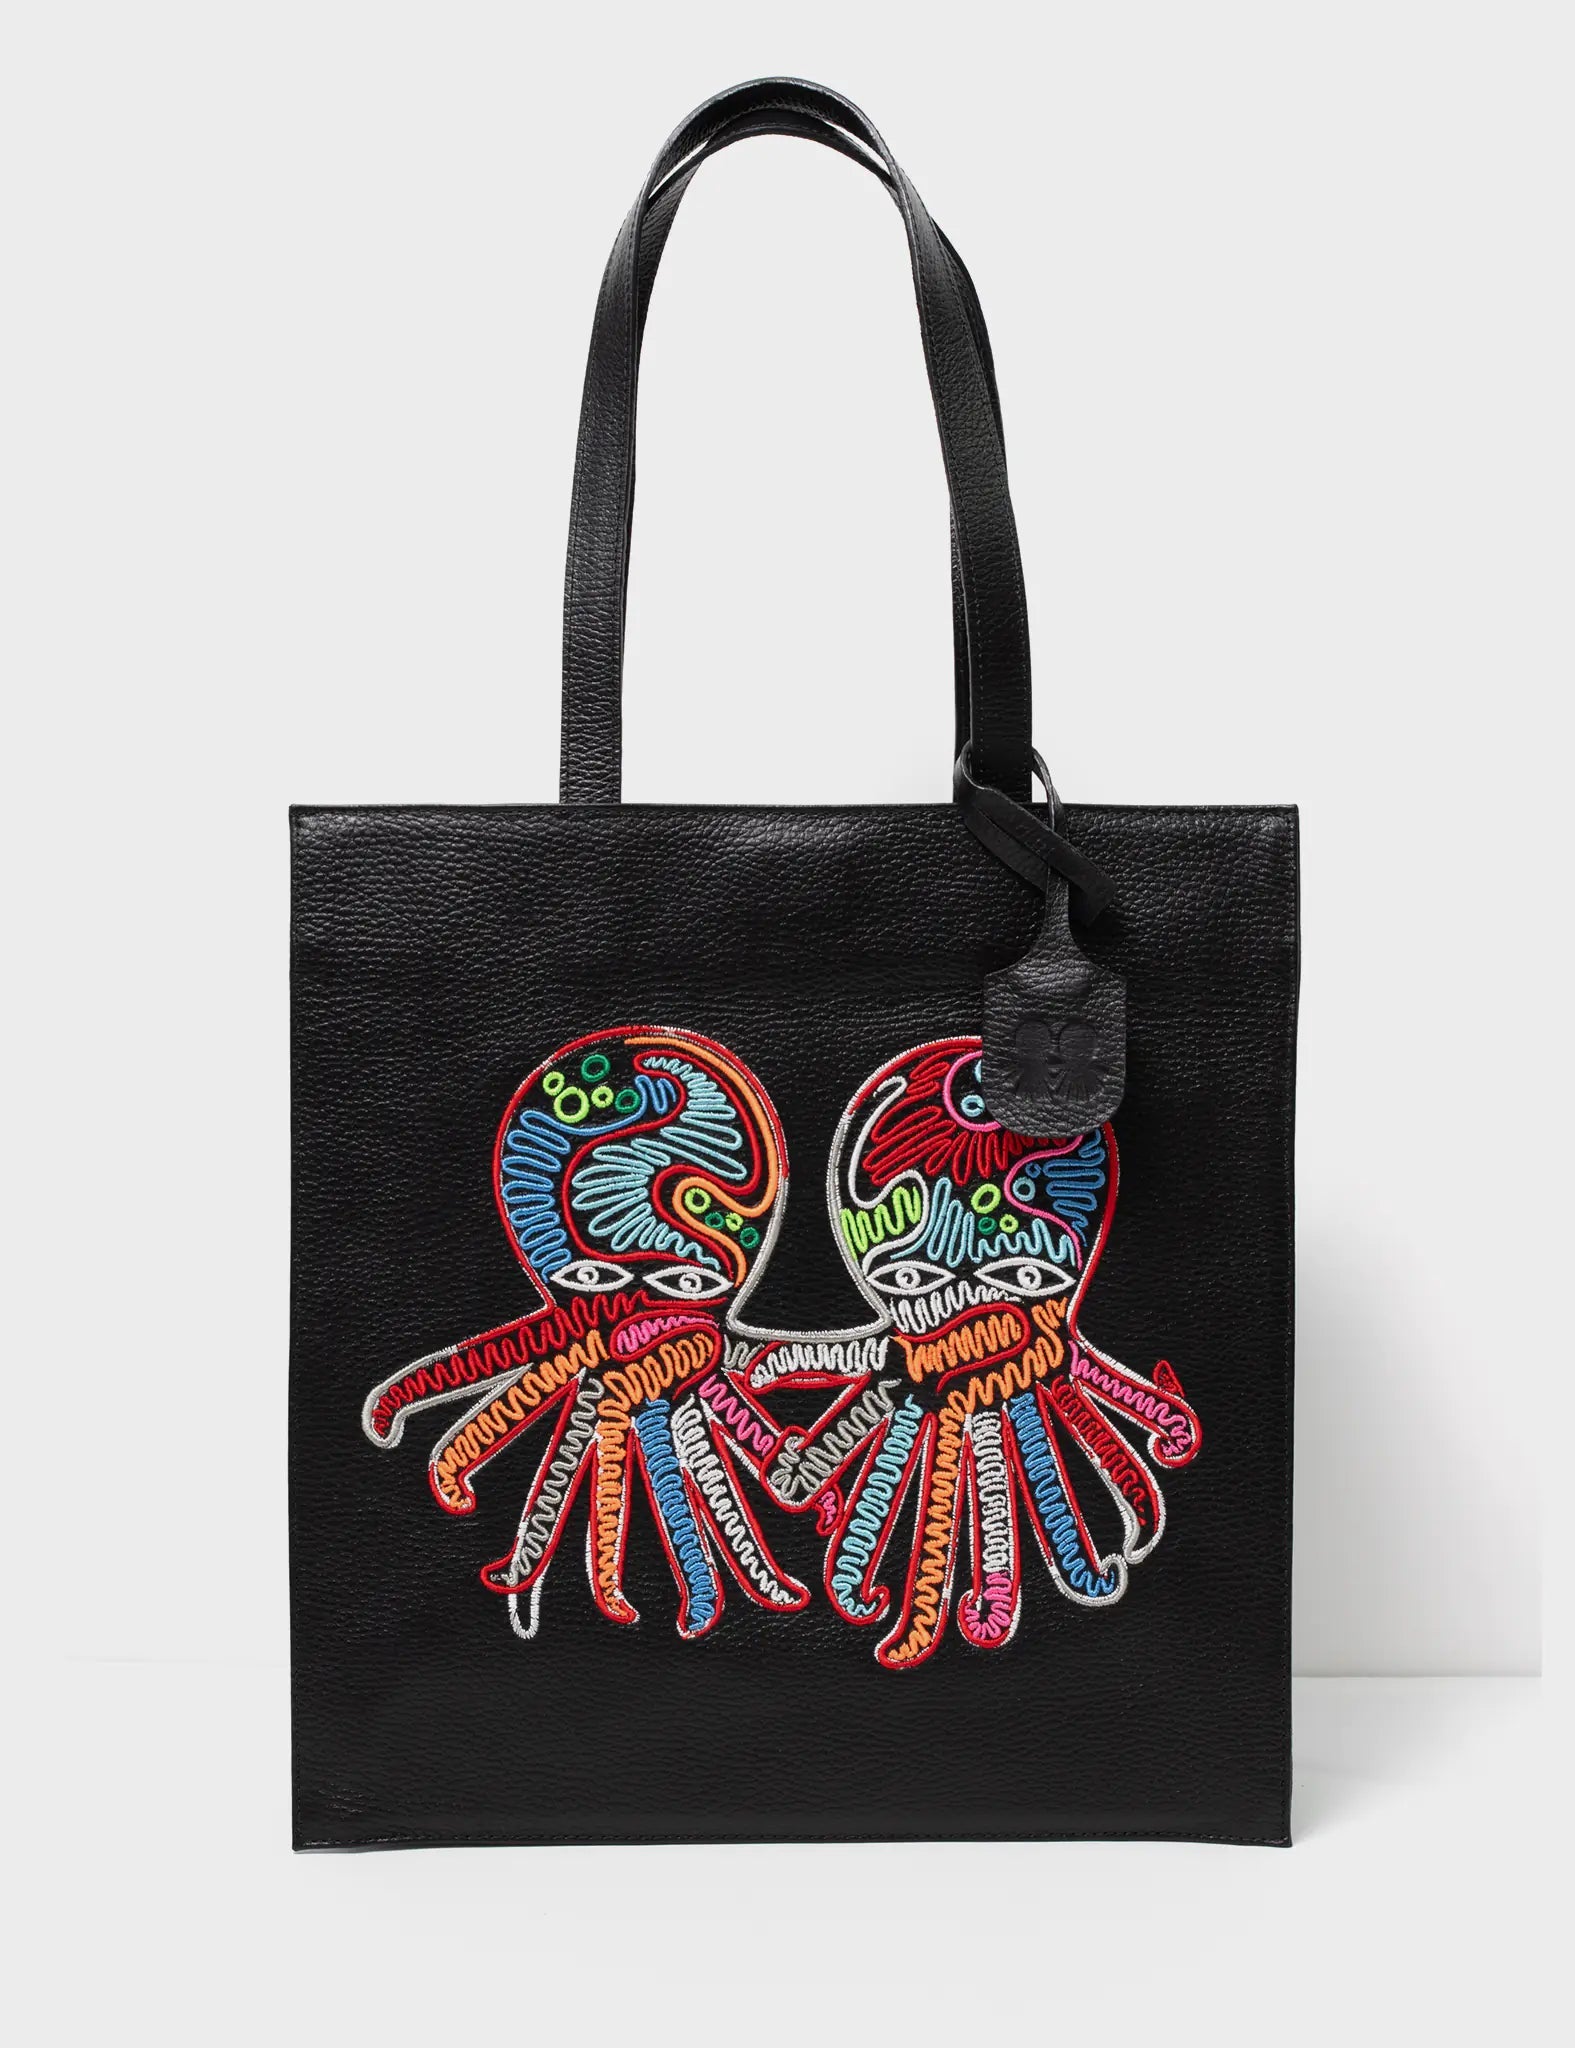 Black Leather Tote Bag - Multicolored Octopus Cord Embroidery – Min & Mon